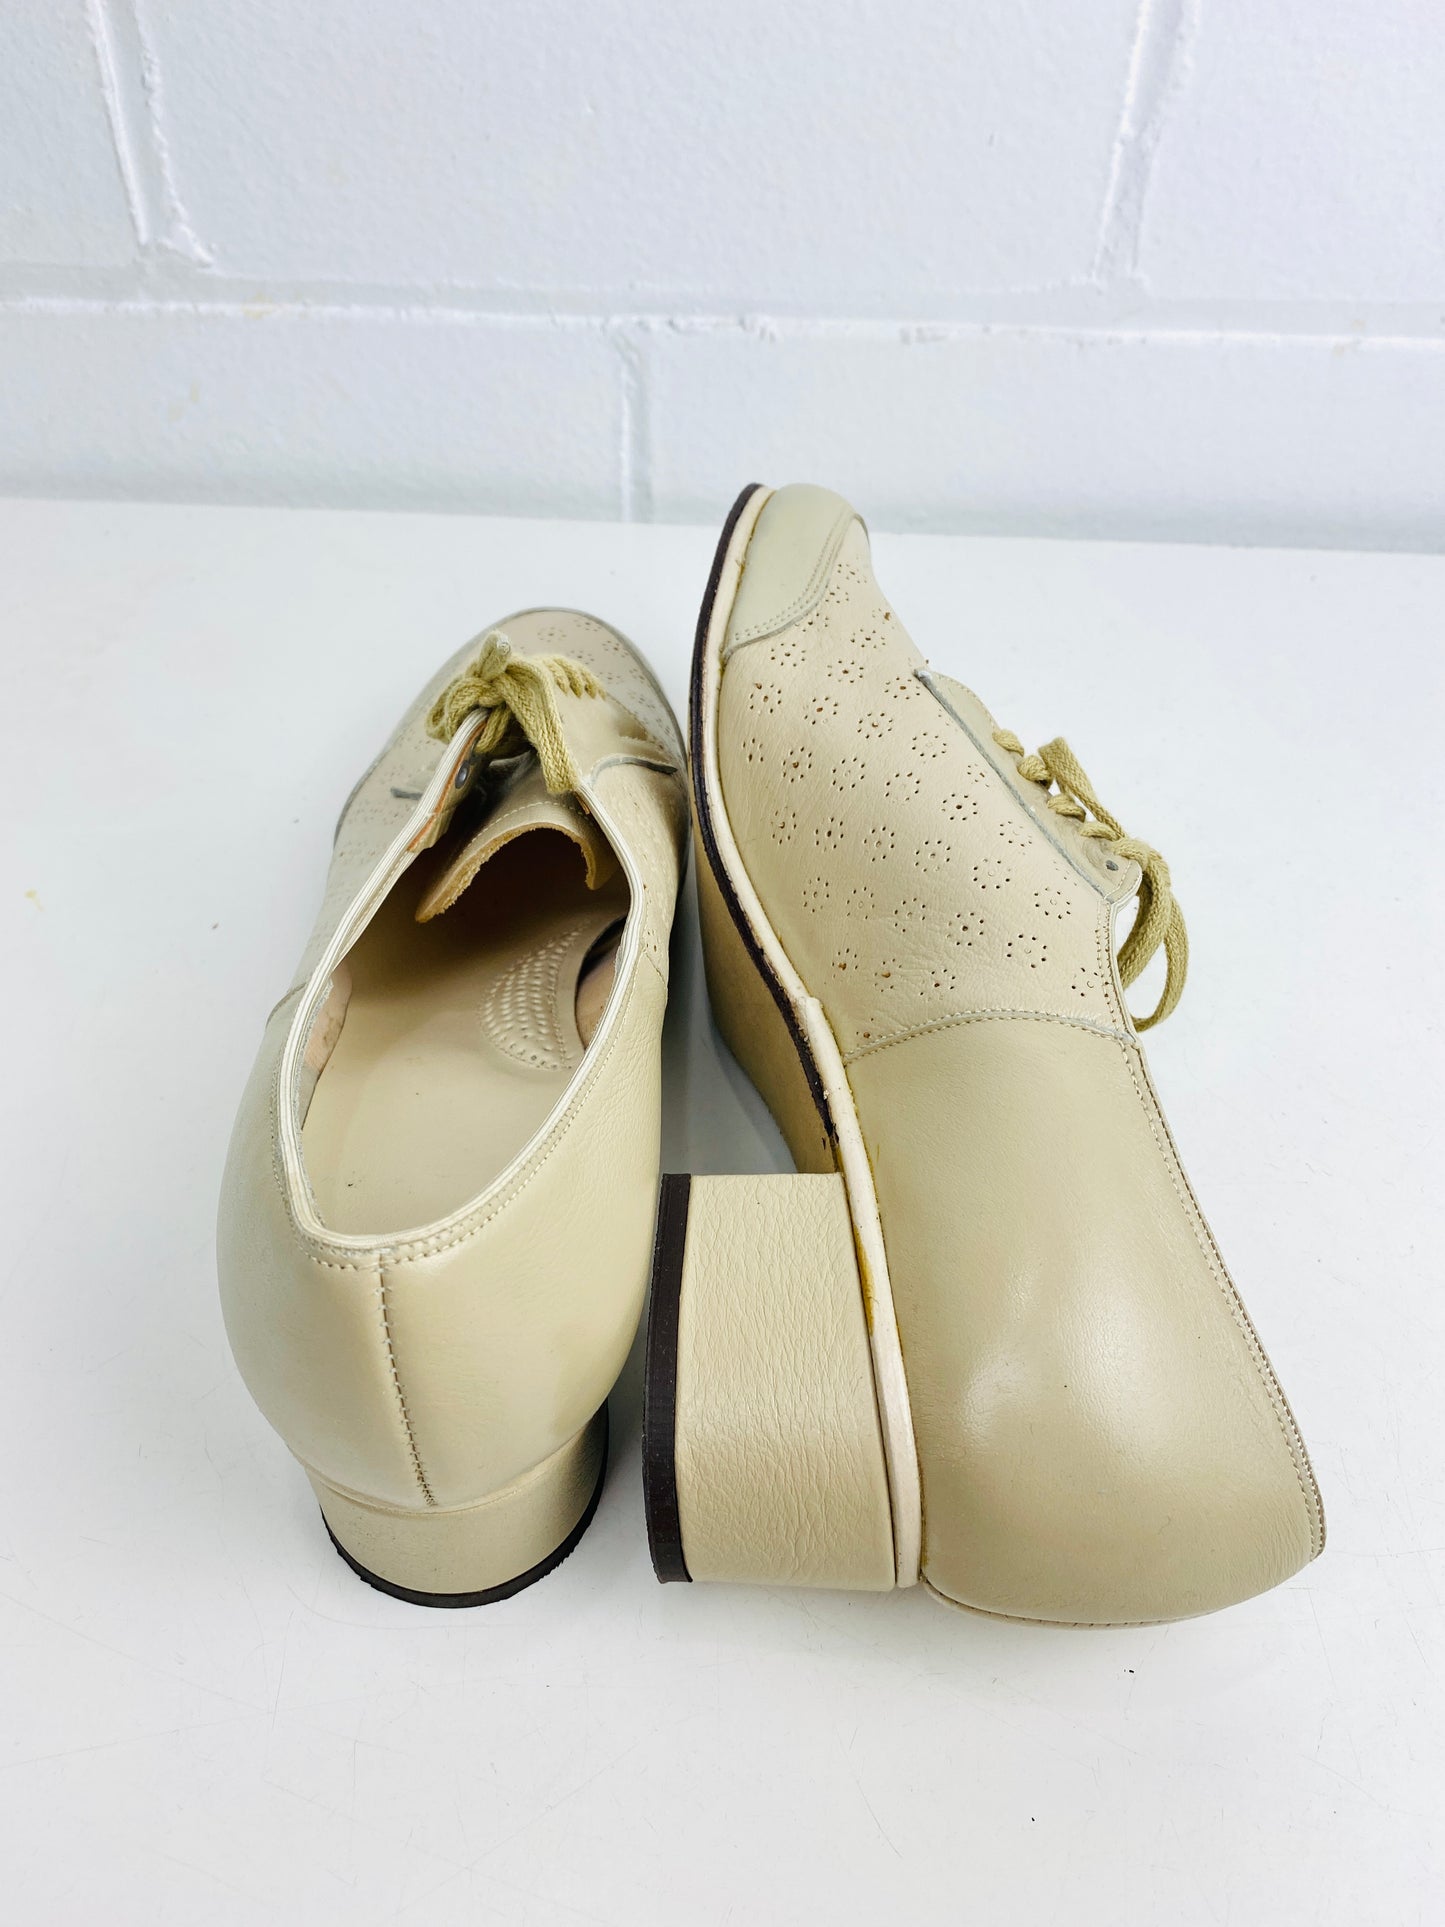 Vintage Deadstock Shoes, Women's 1980s Beige Leather Cuban Heel Oxfords, NOS, 1616